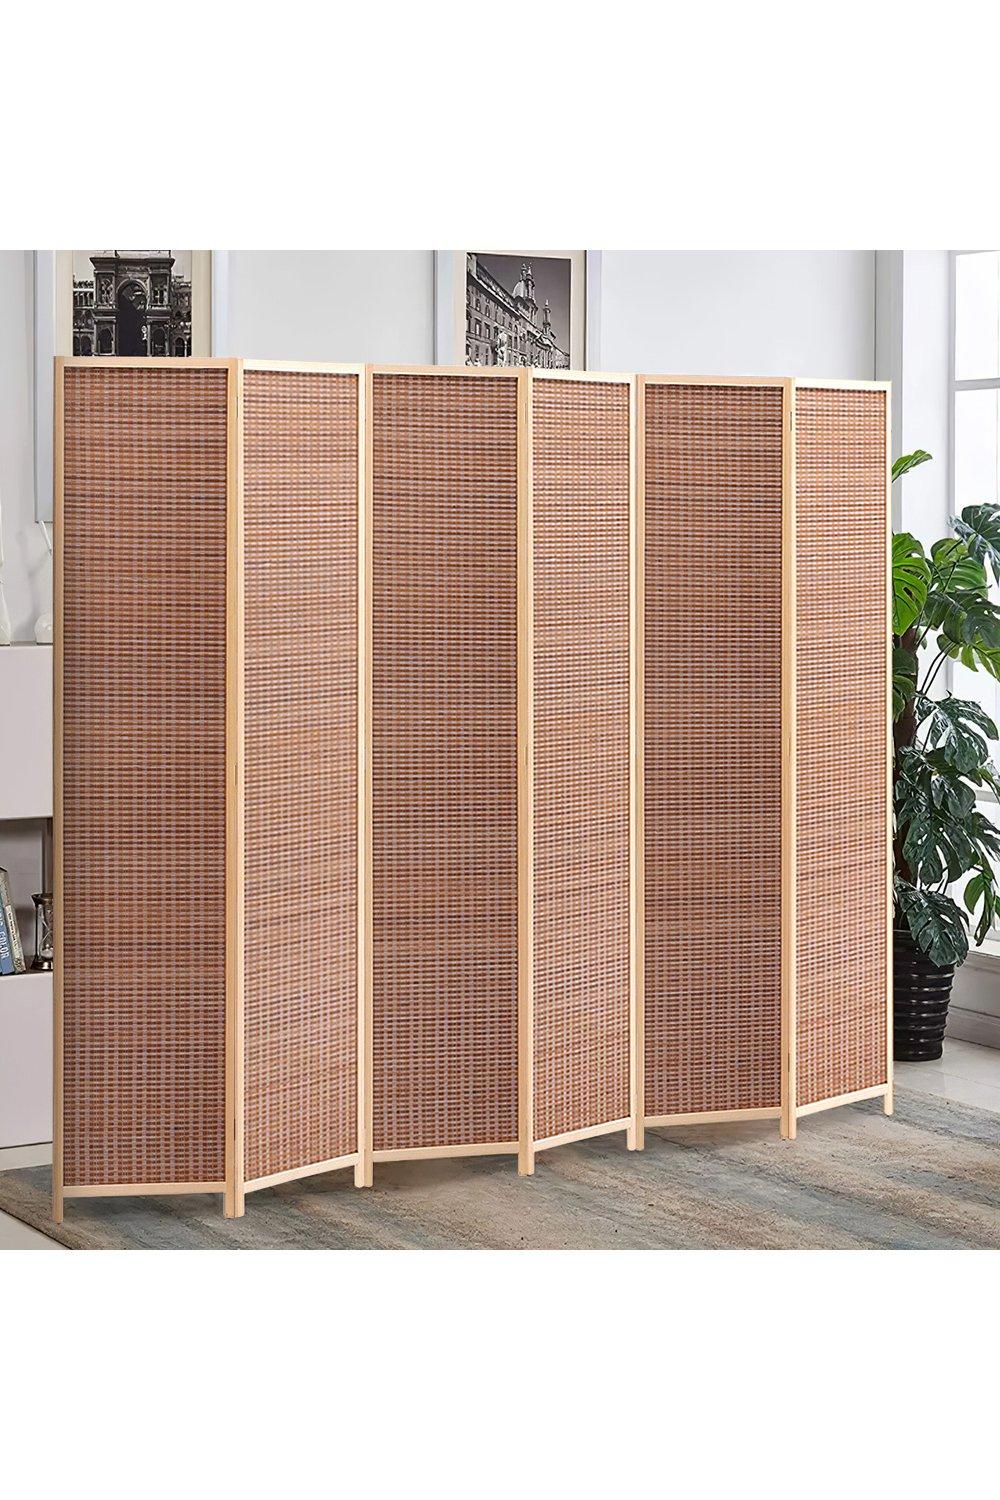 6-Panel Bamboo Woven Folding Room Divider